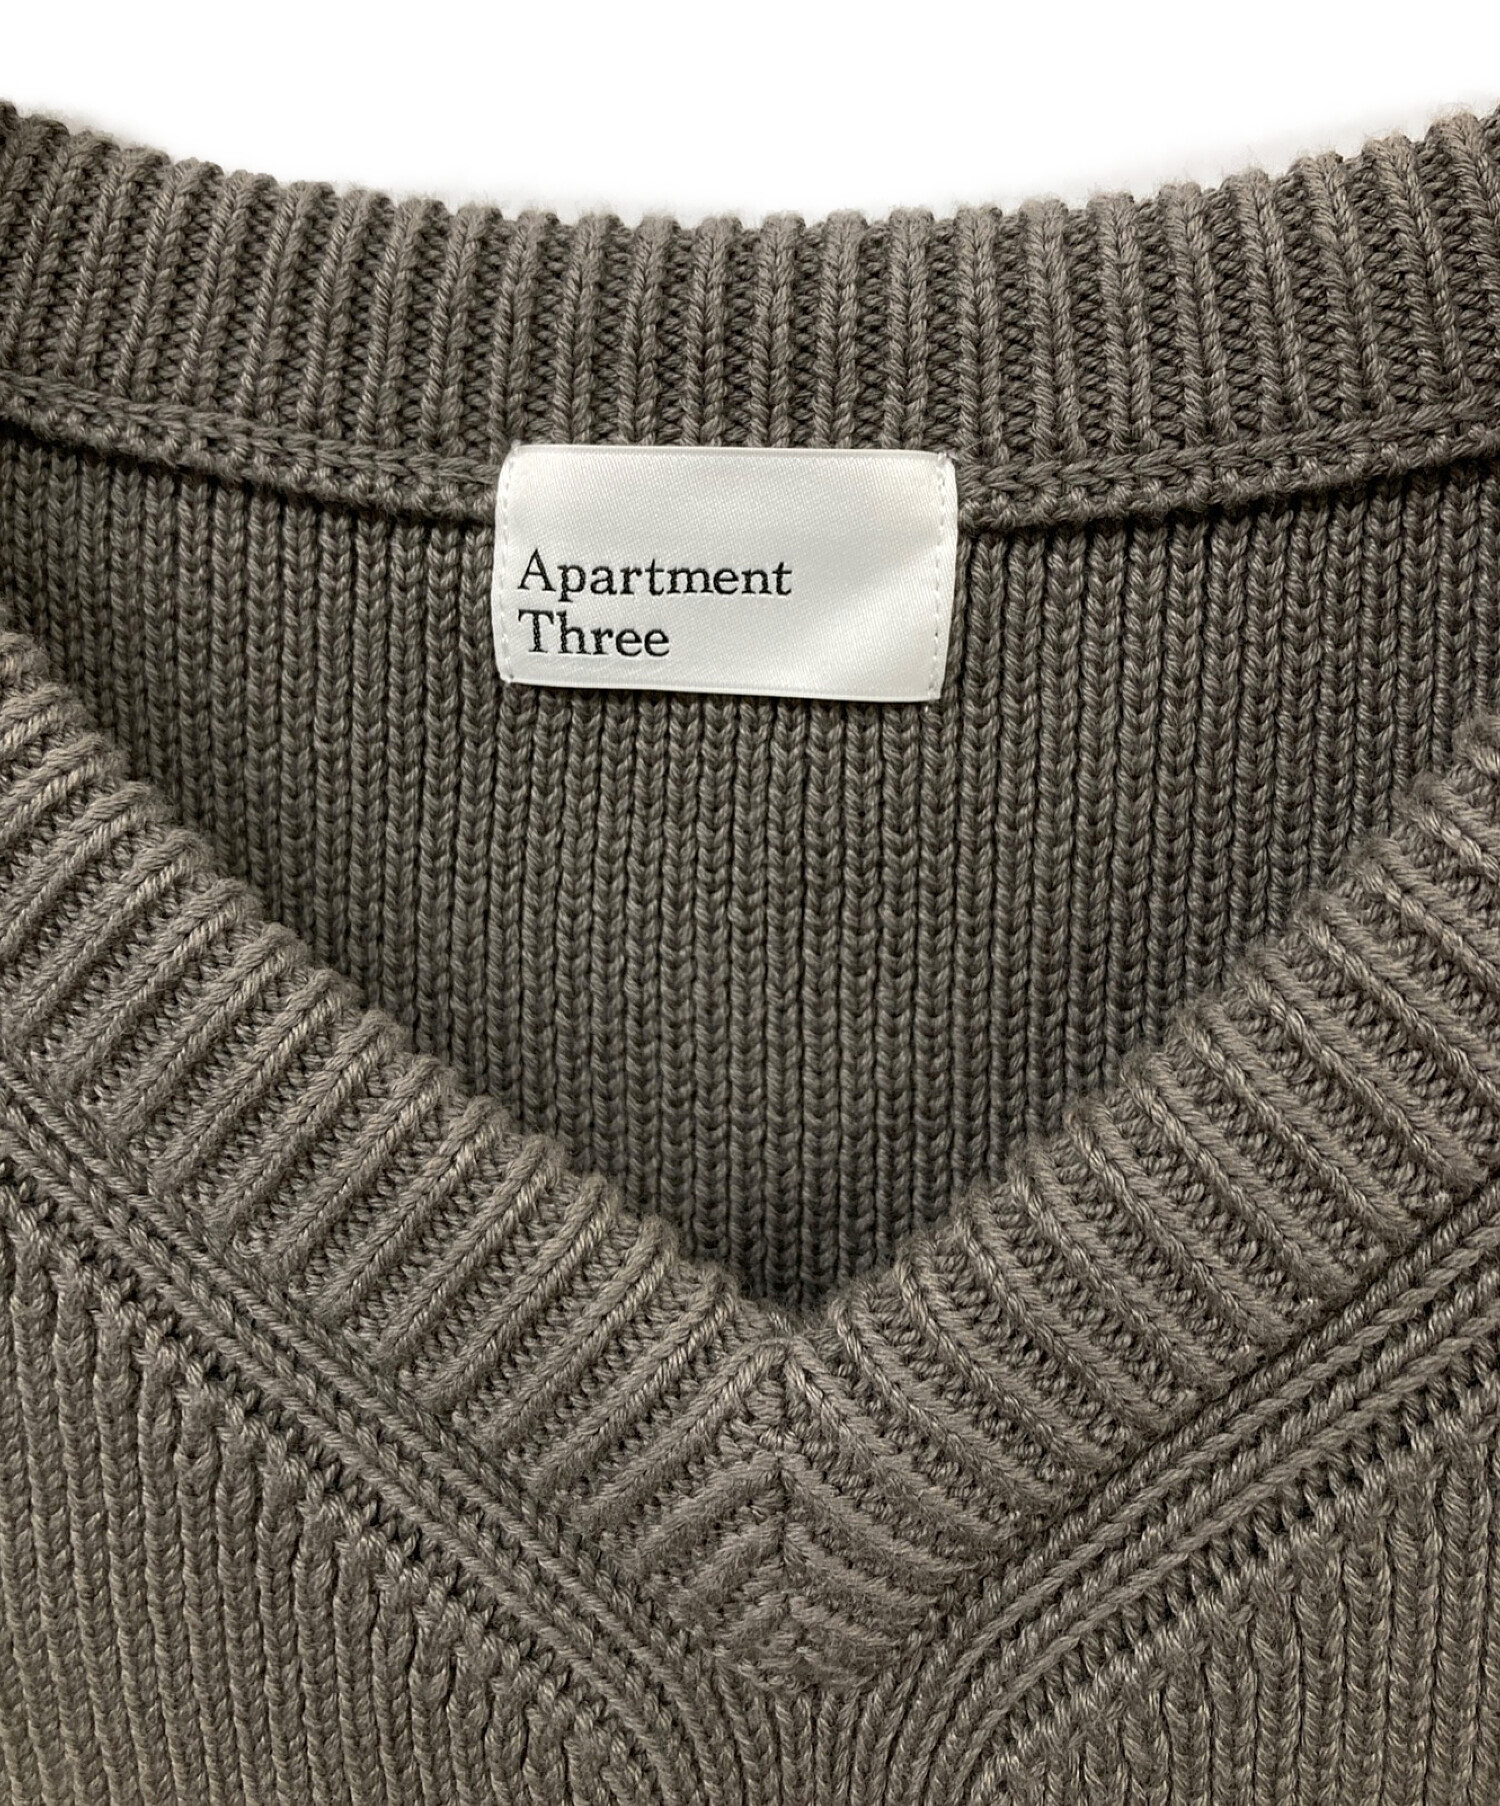 Apartment Three Sweater Vest 最新情報 - トップス